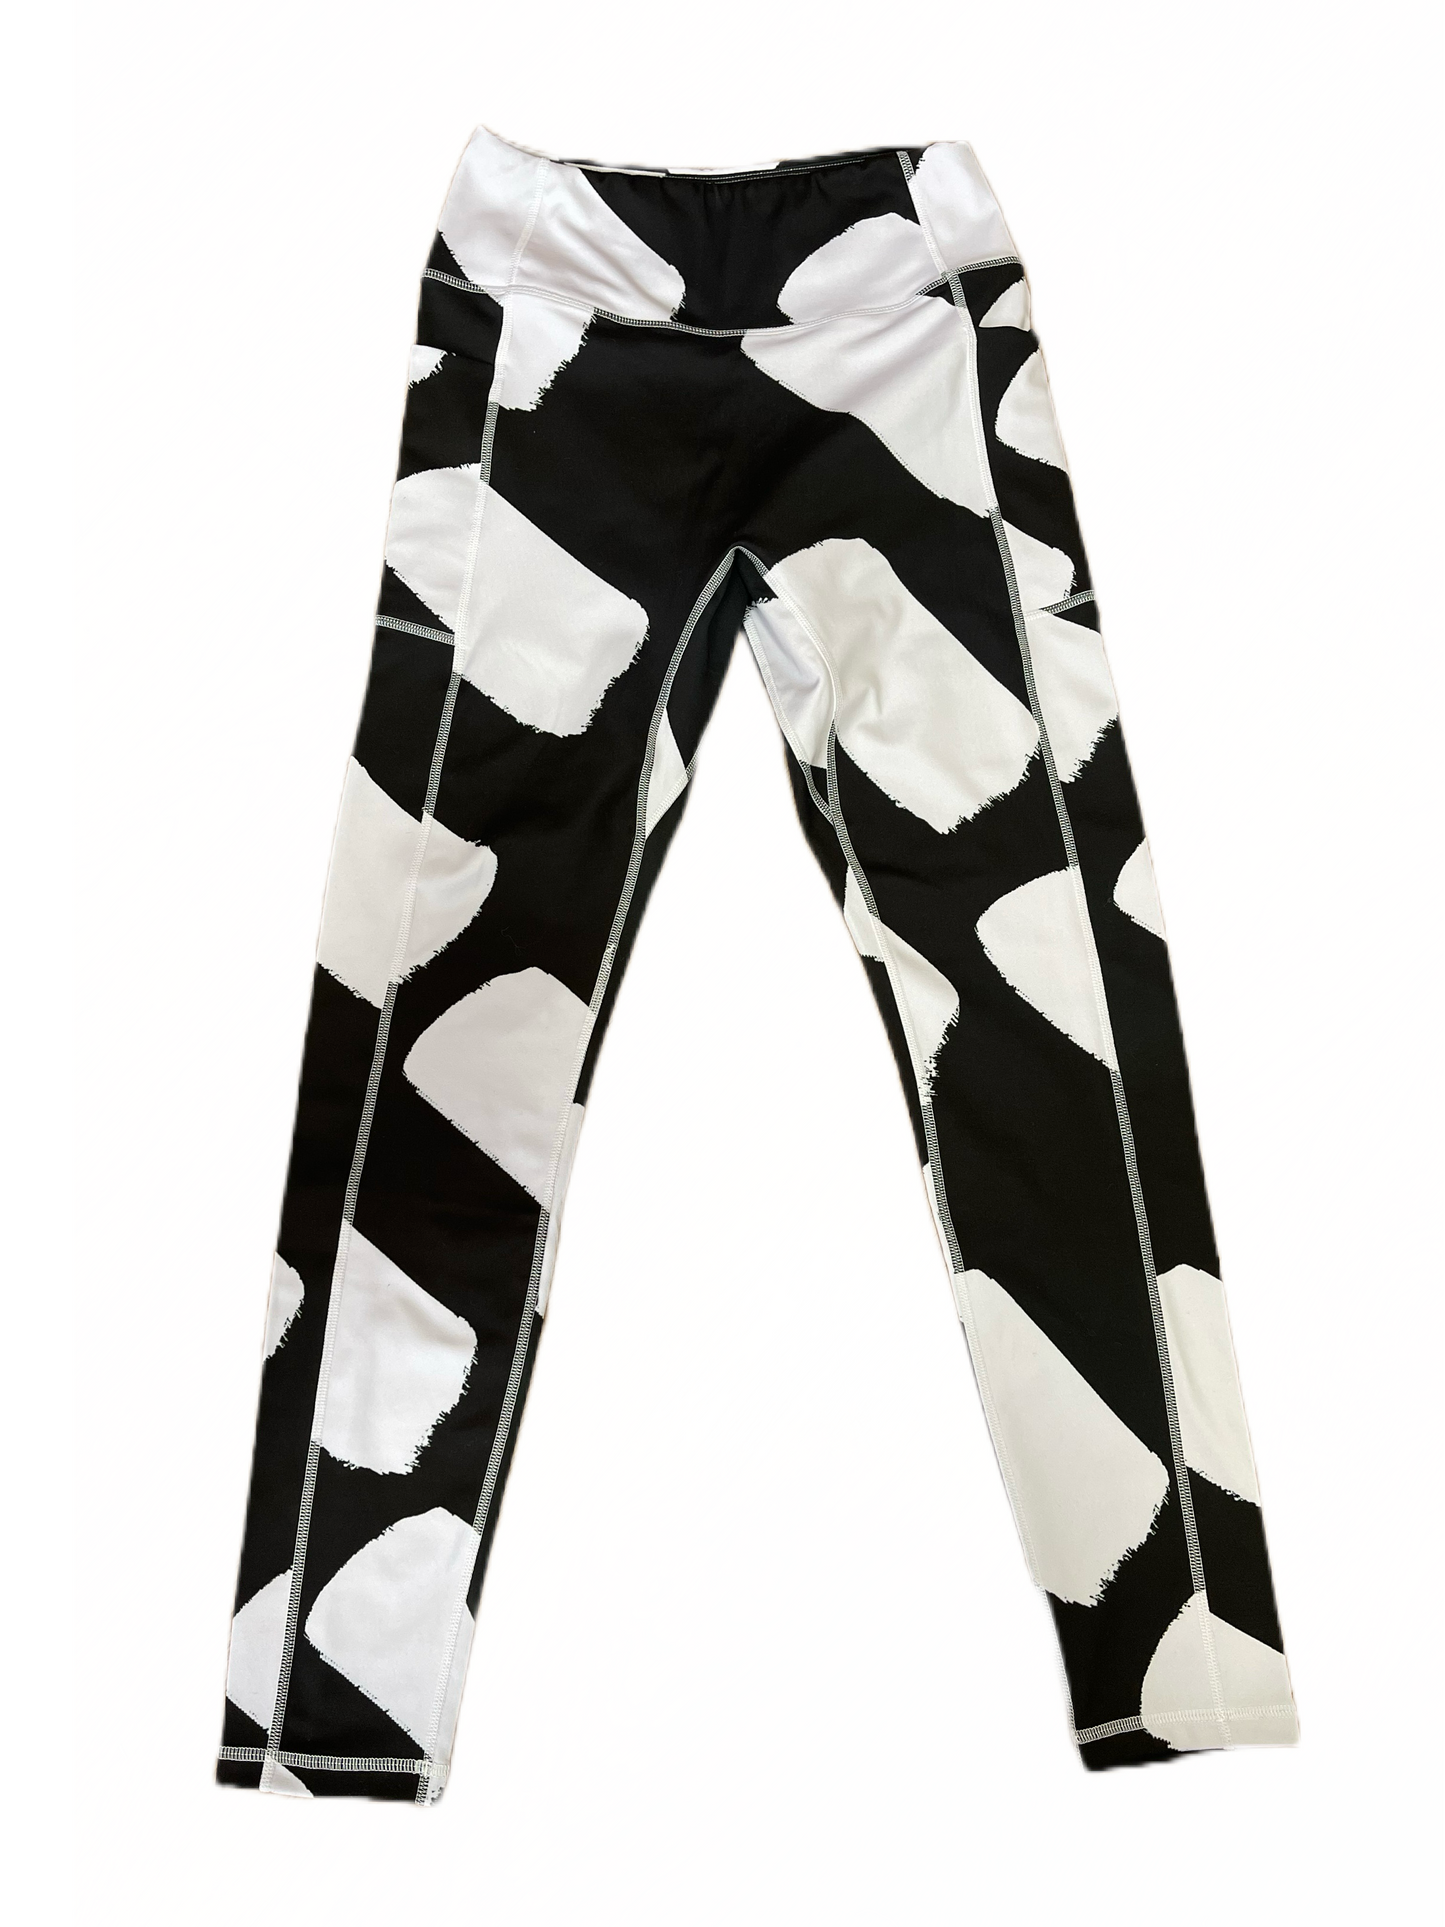 Black and white dash leggings